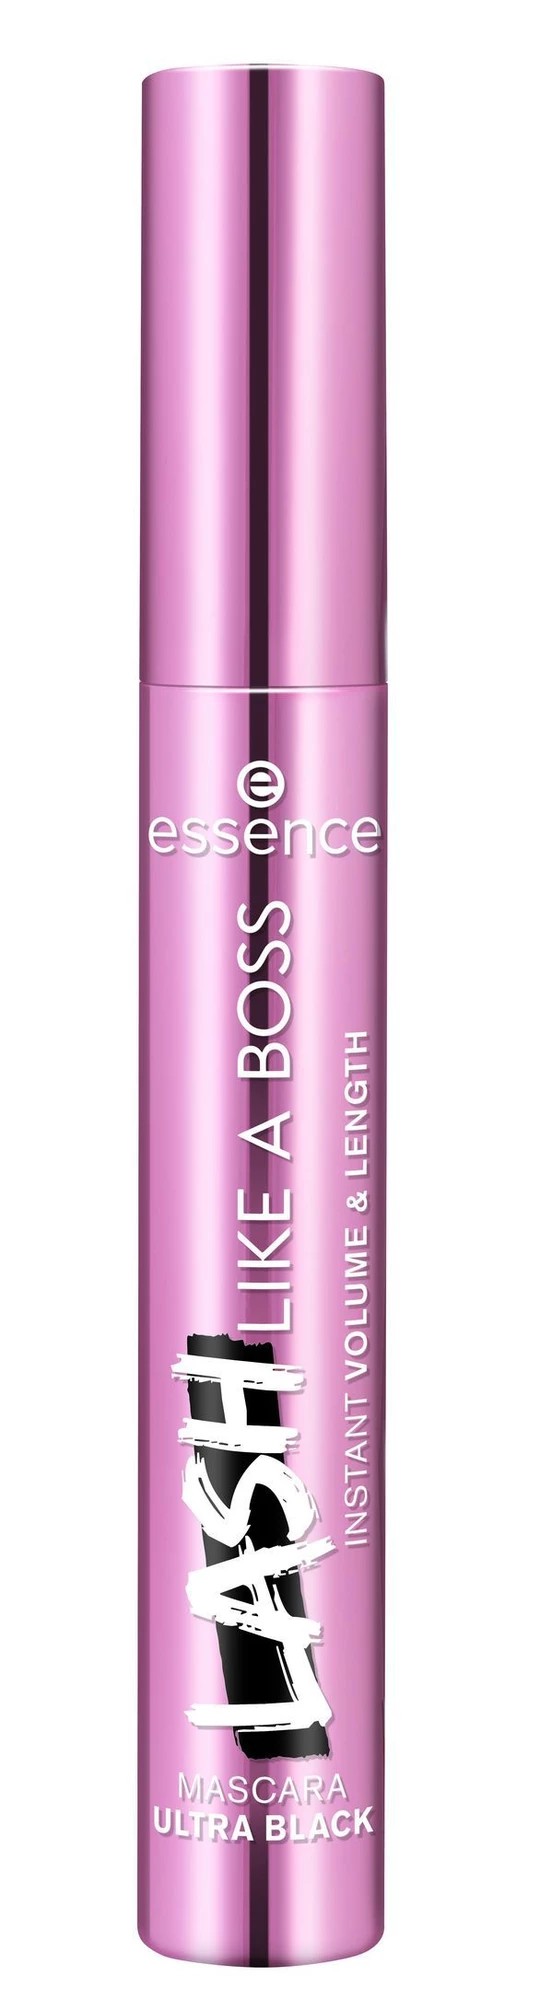 Essence Like A Boss Volume Mascara